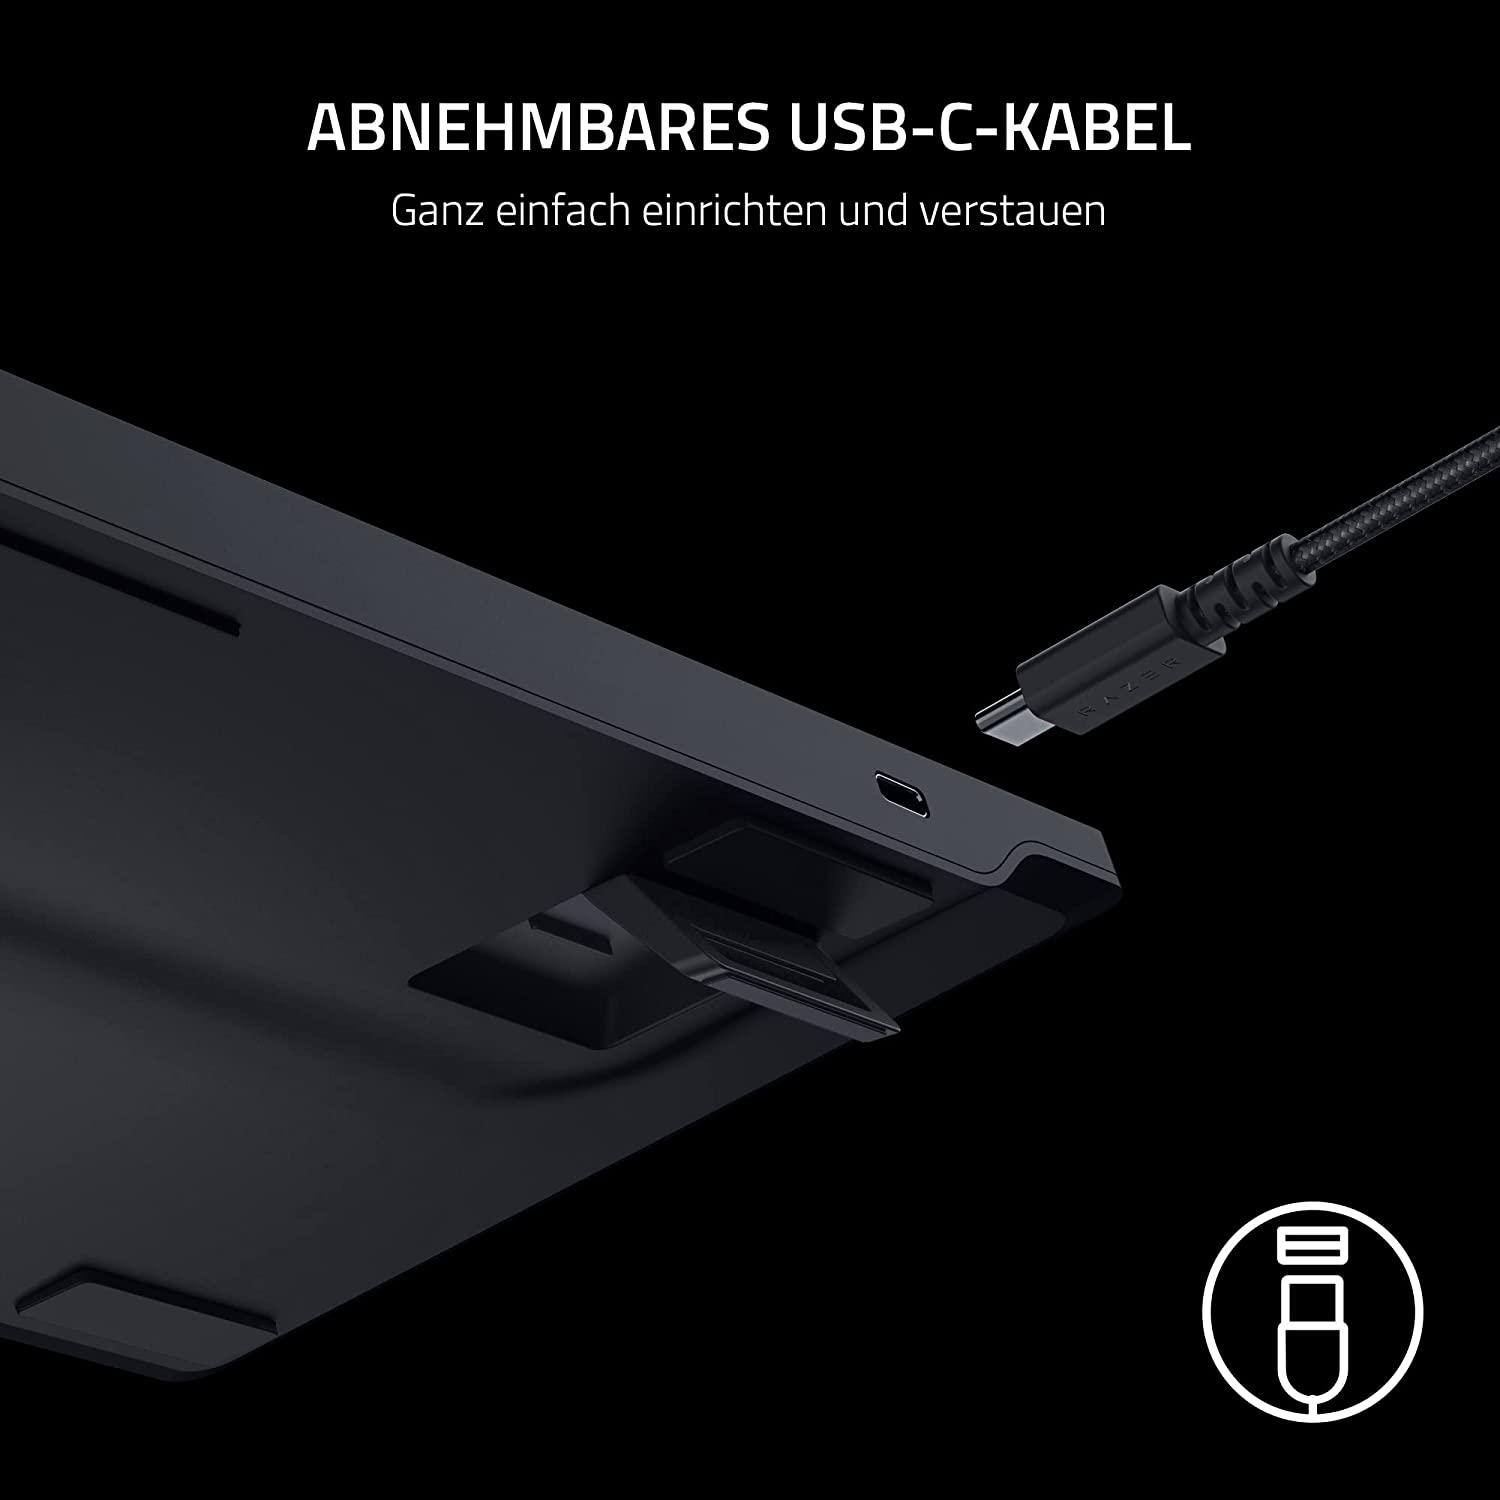 Razer DeathStalker V2  Low-Profile RGB Optical Gaming Keyboard Linear Optical Switch (US Layout) - Black